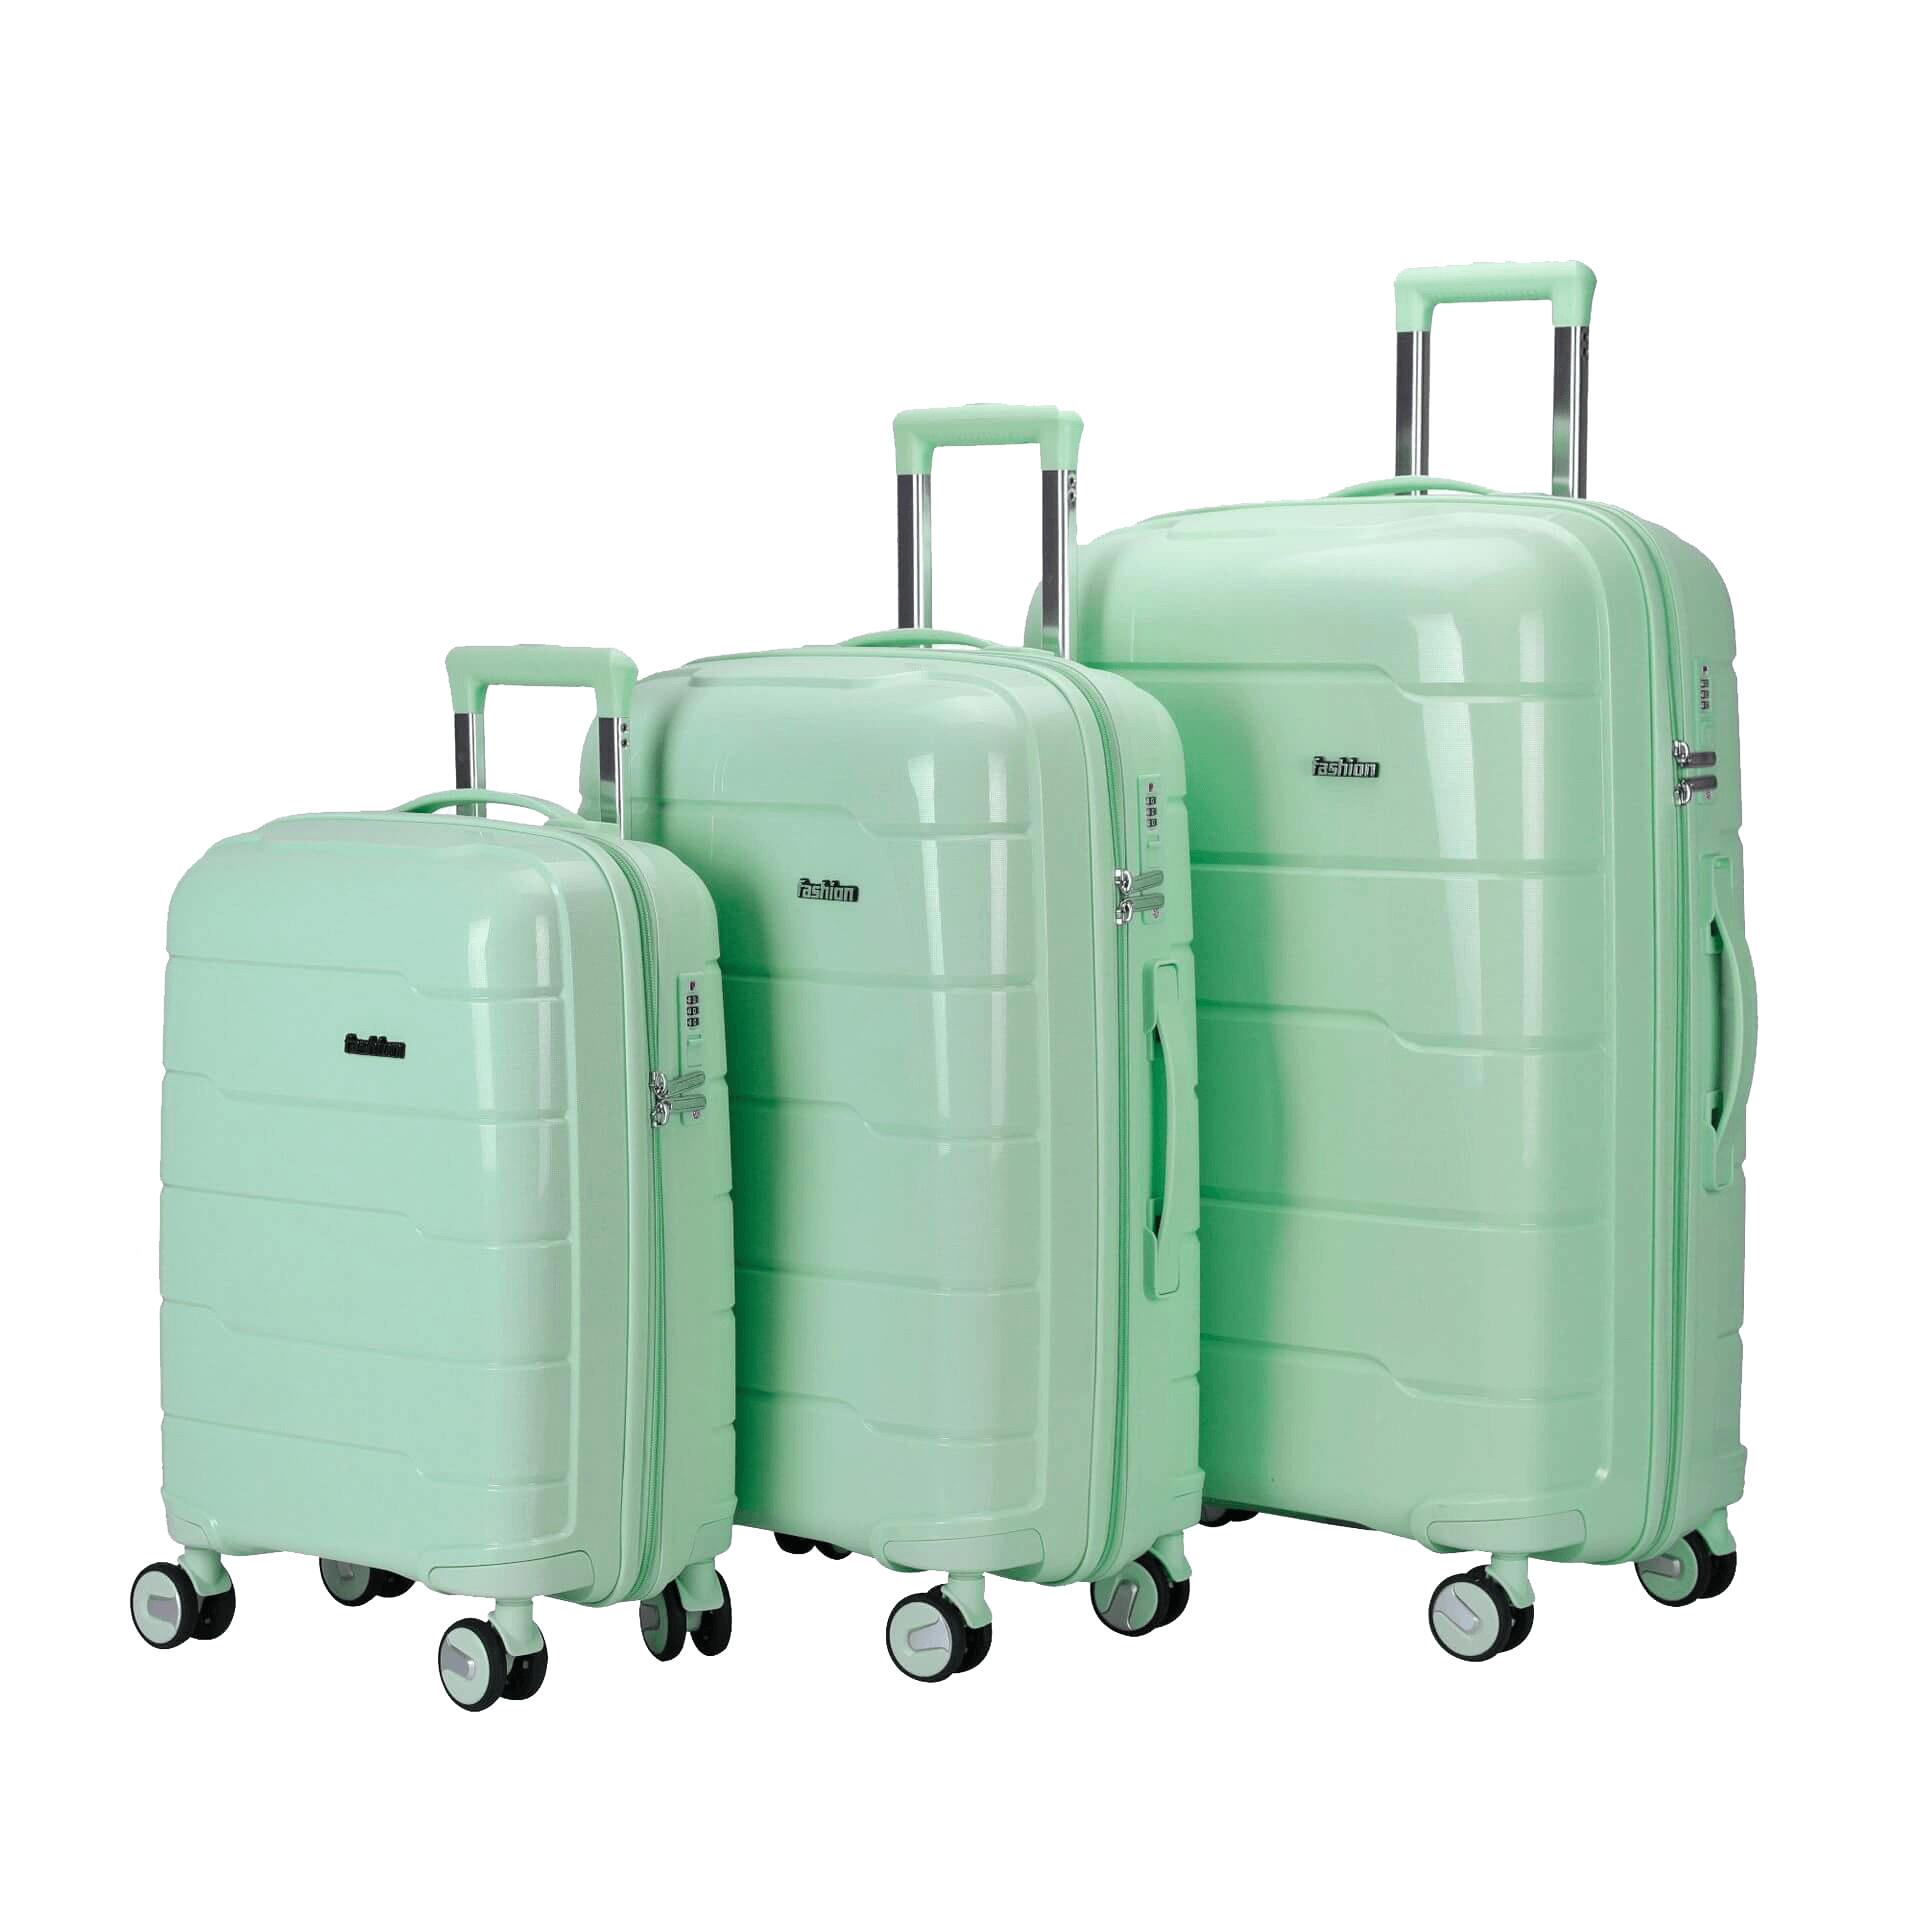 2021 China New Design Fashion Luggage - PP LUGGAGE BAIGOU FACTORY 882# 3PCS SET 20 24 28 INCH DOUBLE WHEEL MATCHING COLOR TROLLEY LUGGAGE – Omaska